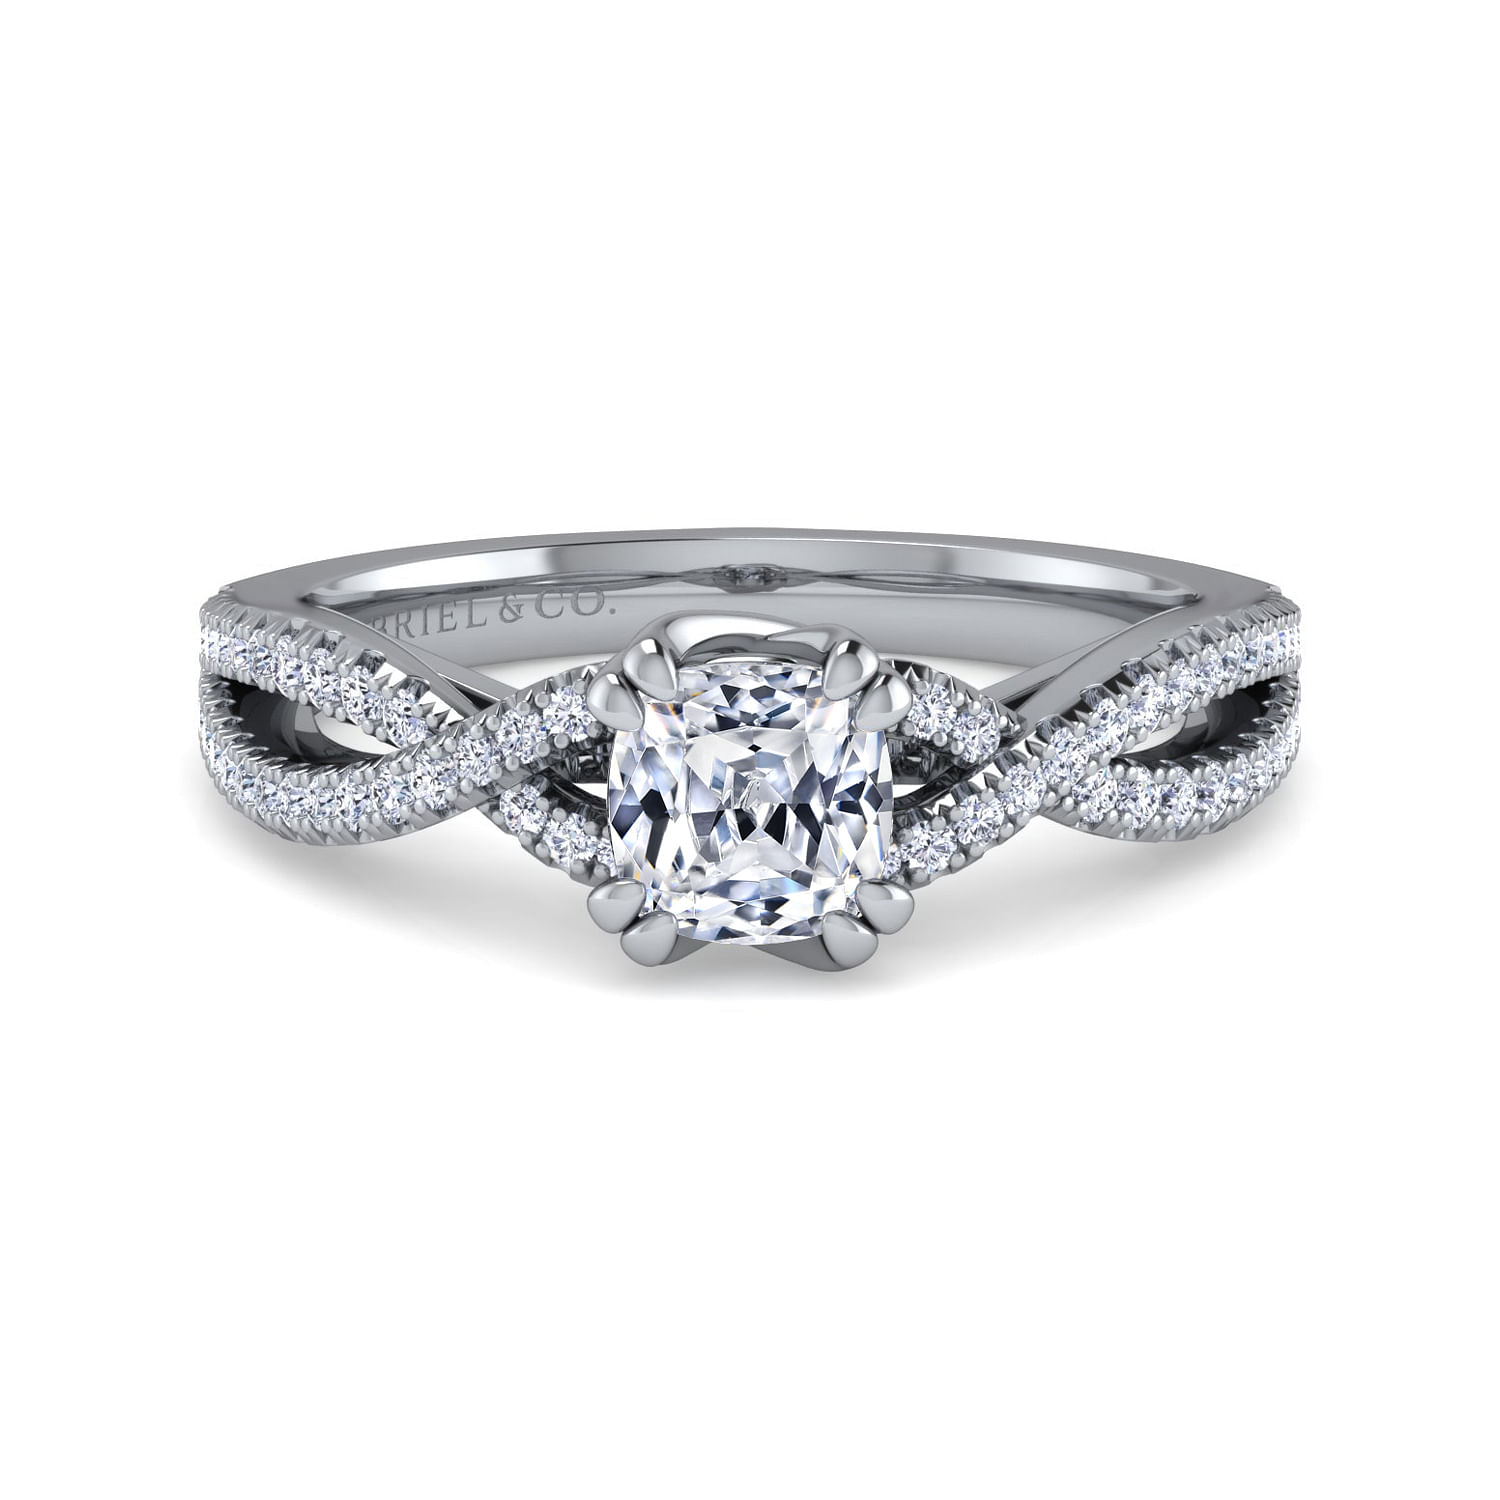 Gina - 14K White Gold Twisted Cushion Cut Diamond Engagement Ring